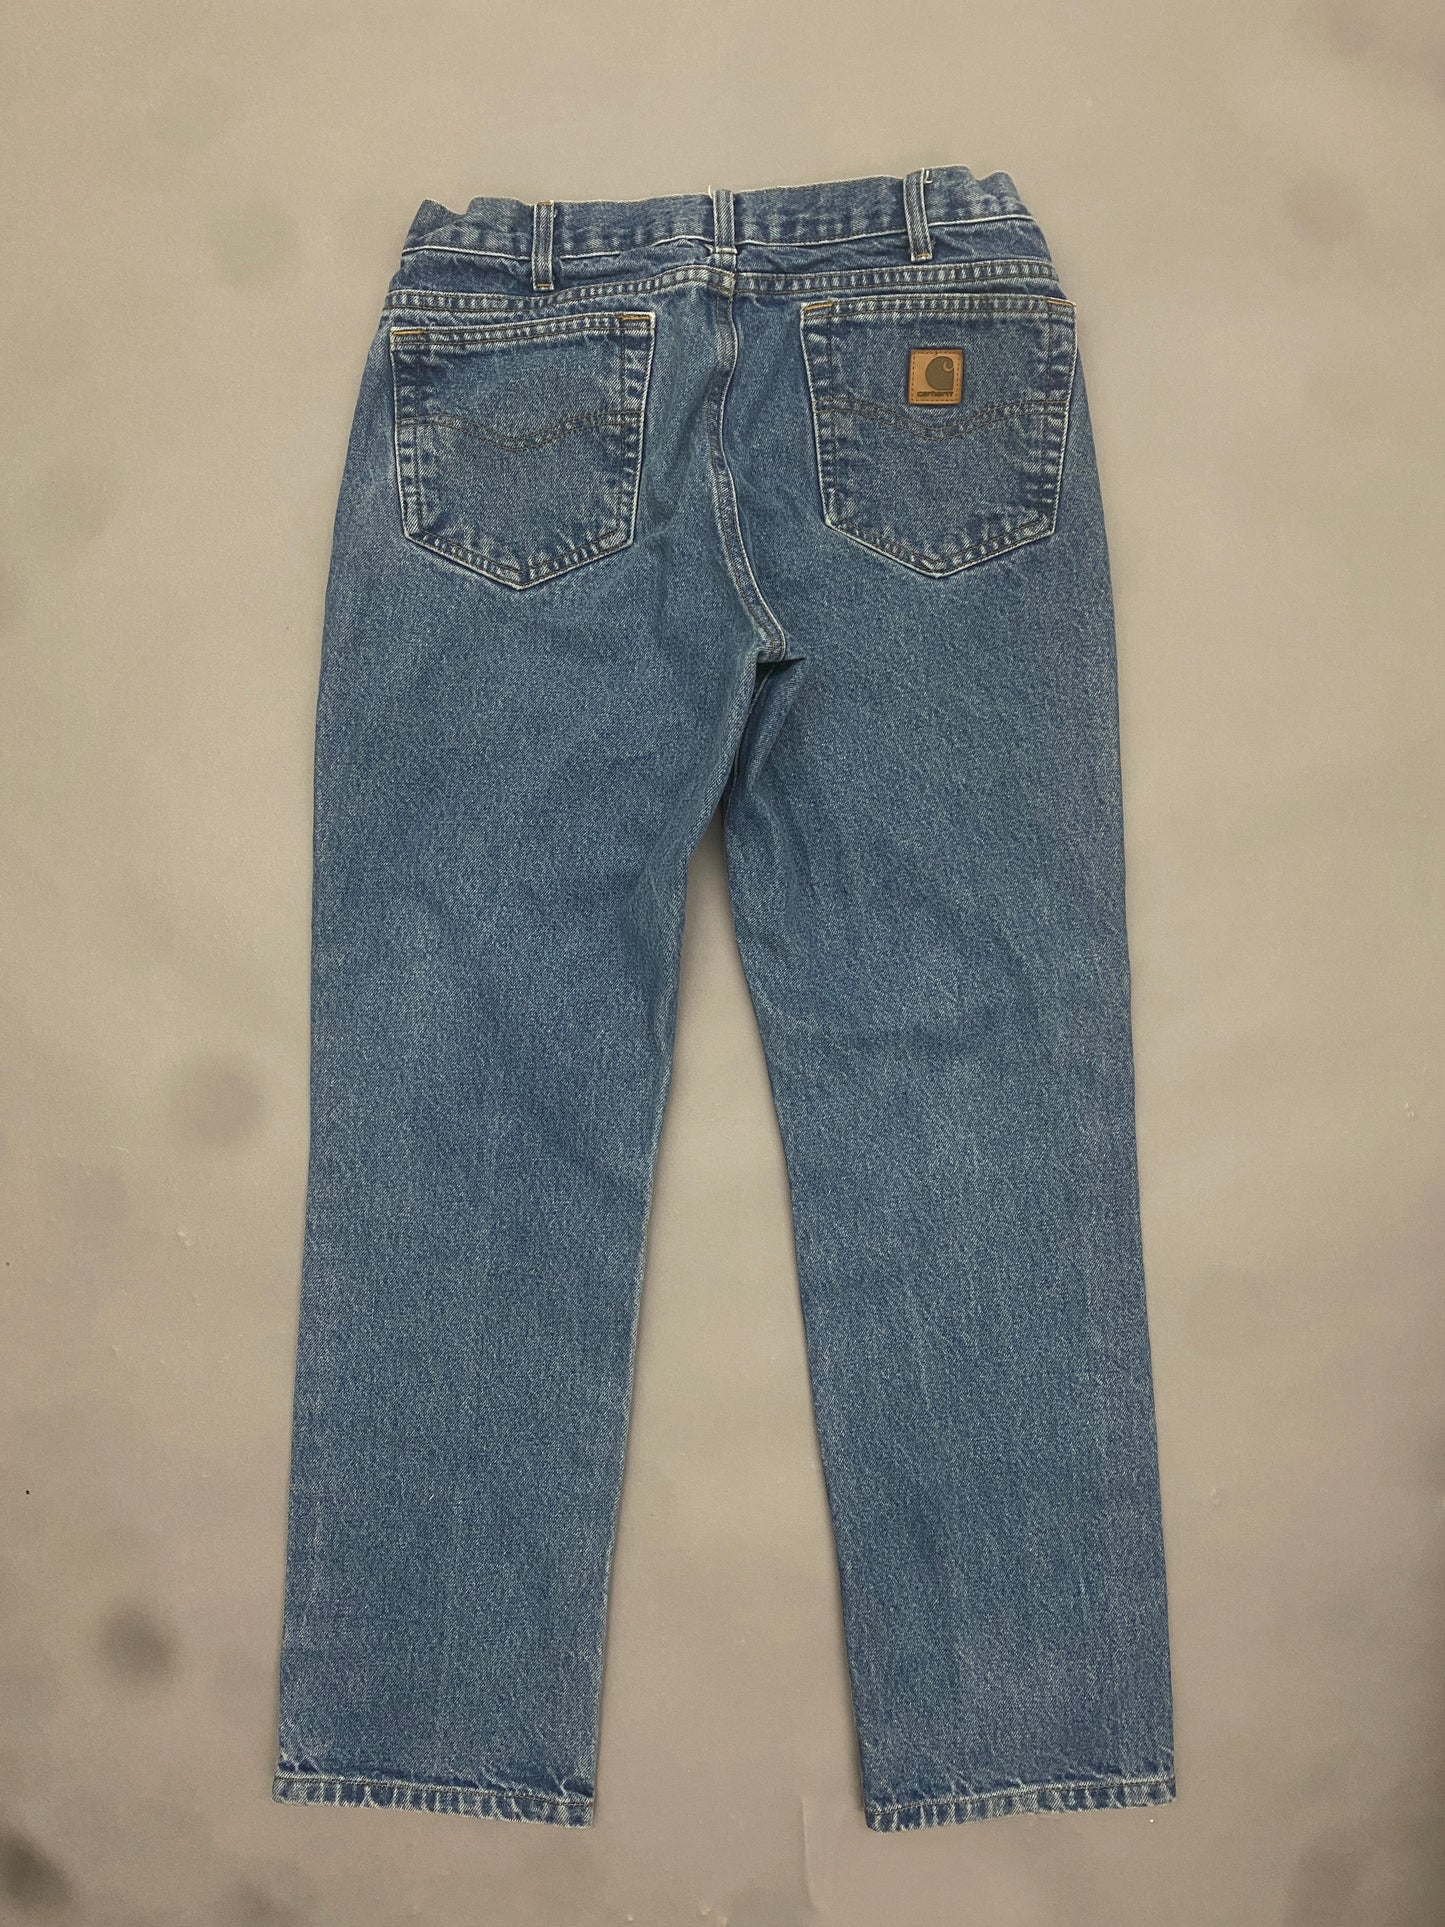 Carhartt Vintage Jeans - 33 x 30